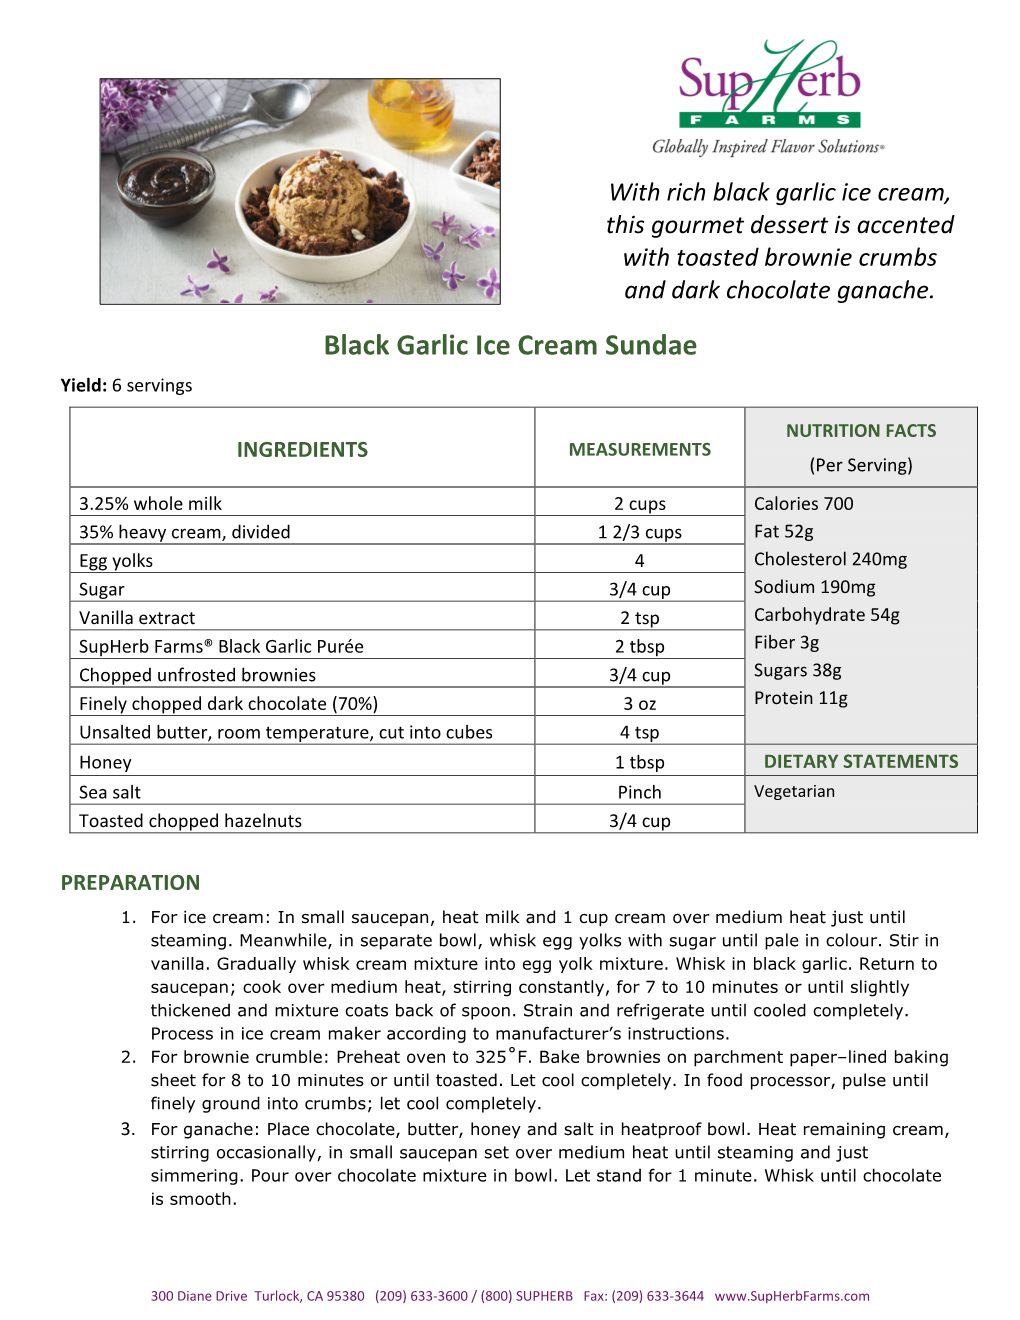 Black Garlic Ice Cream Sundae Yield: 6 Servings